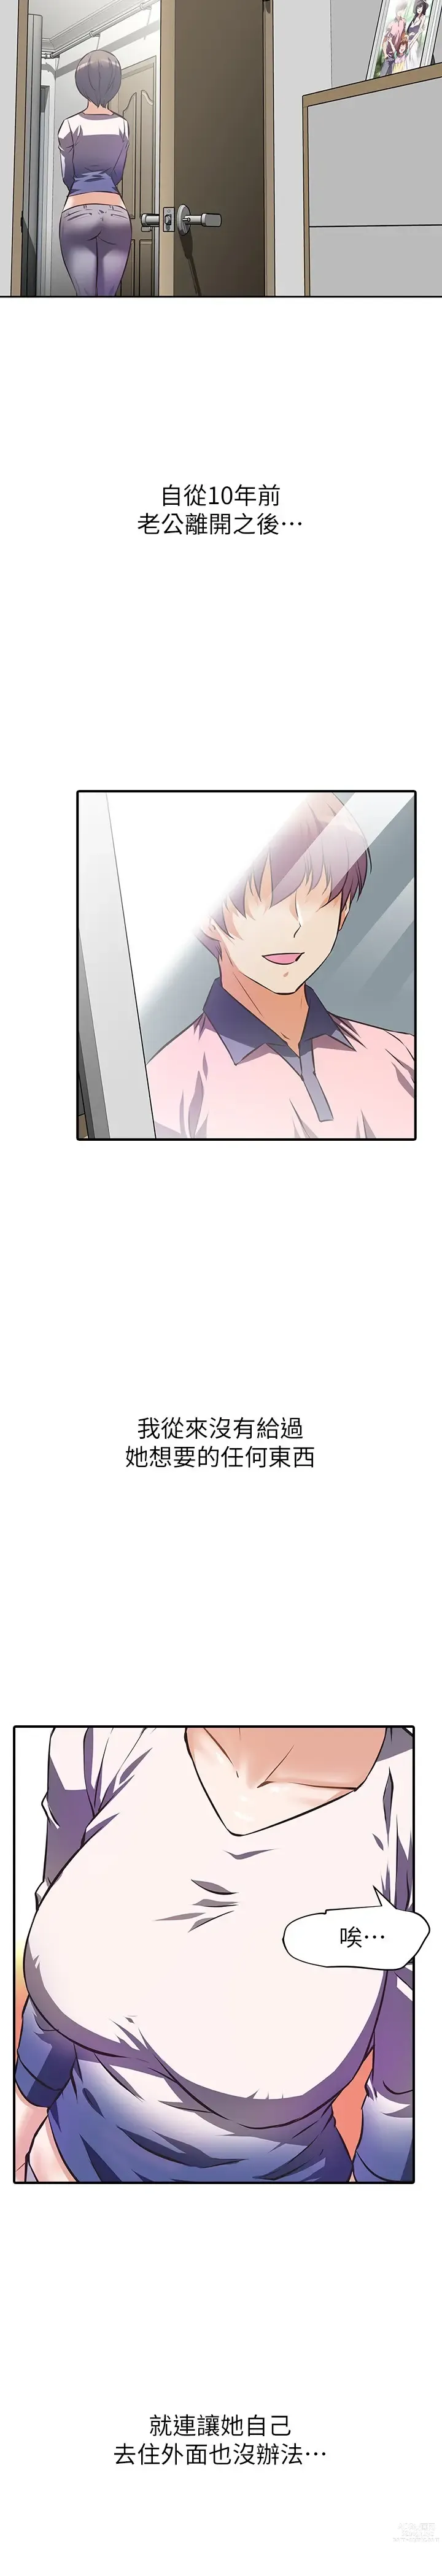 Page 16 of manga 阿姨不可以壞壞 1-30話